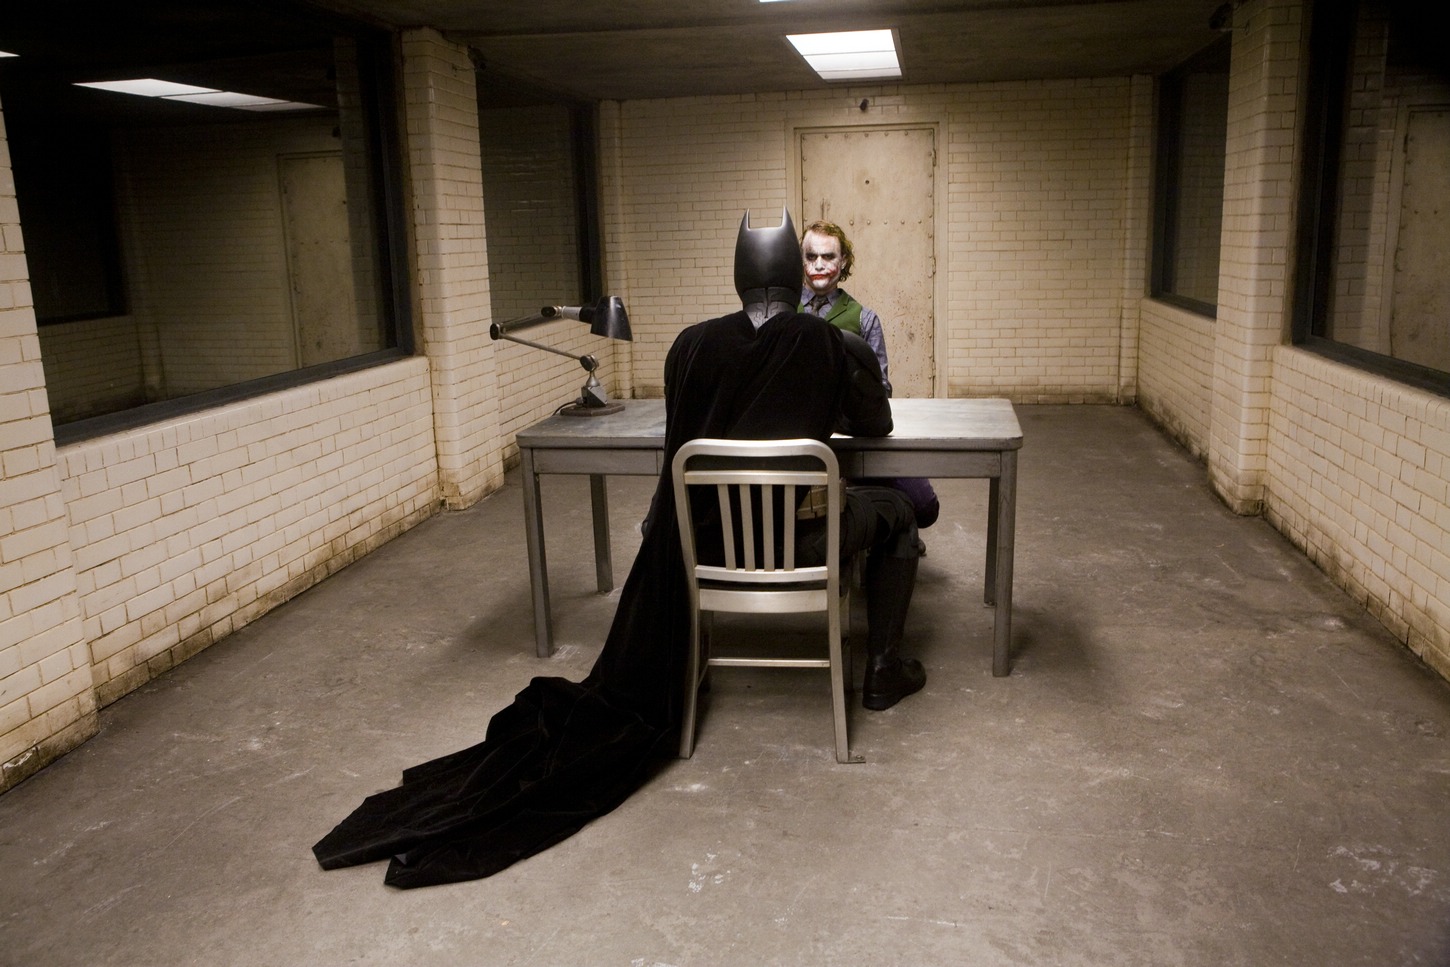 joker and batman interrogation scene